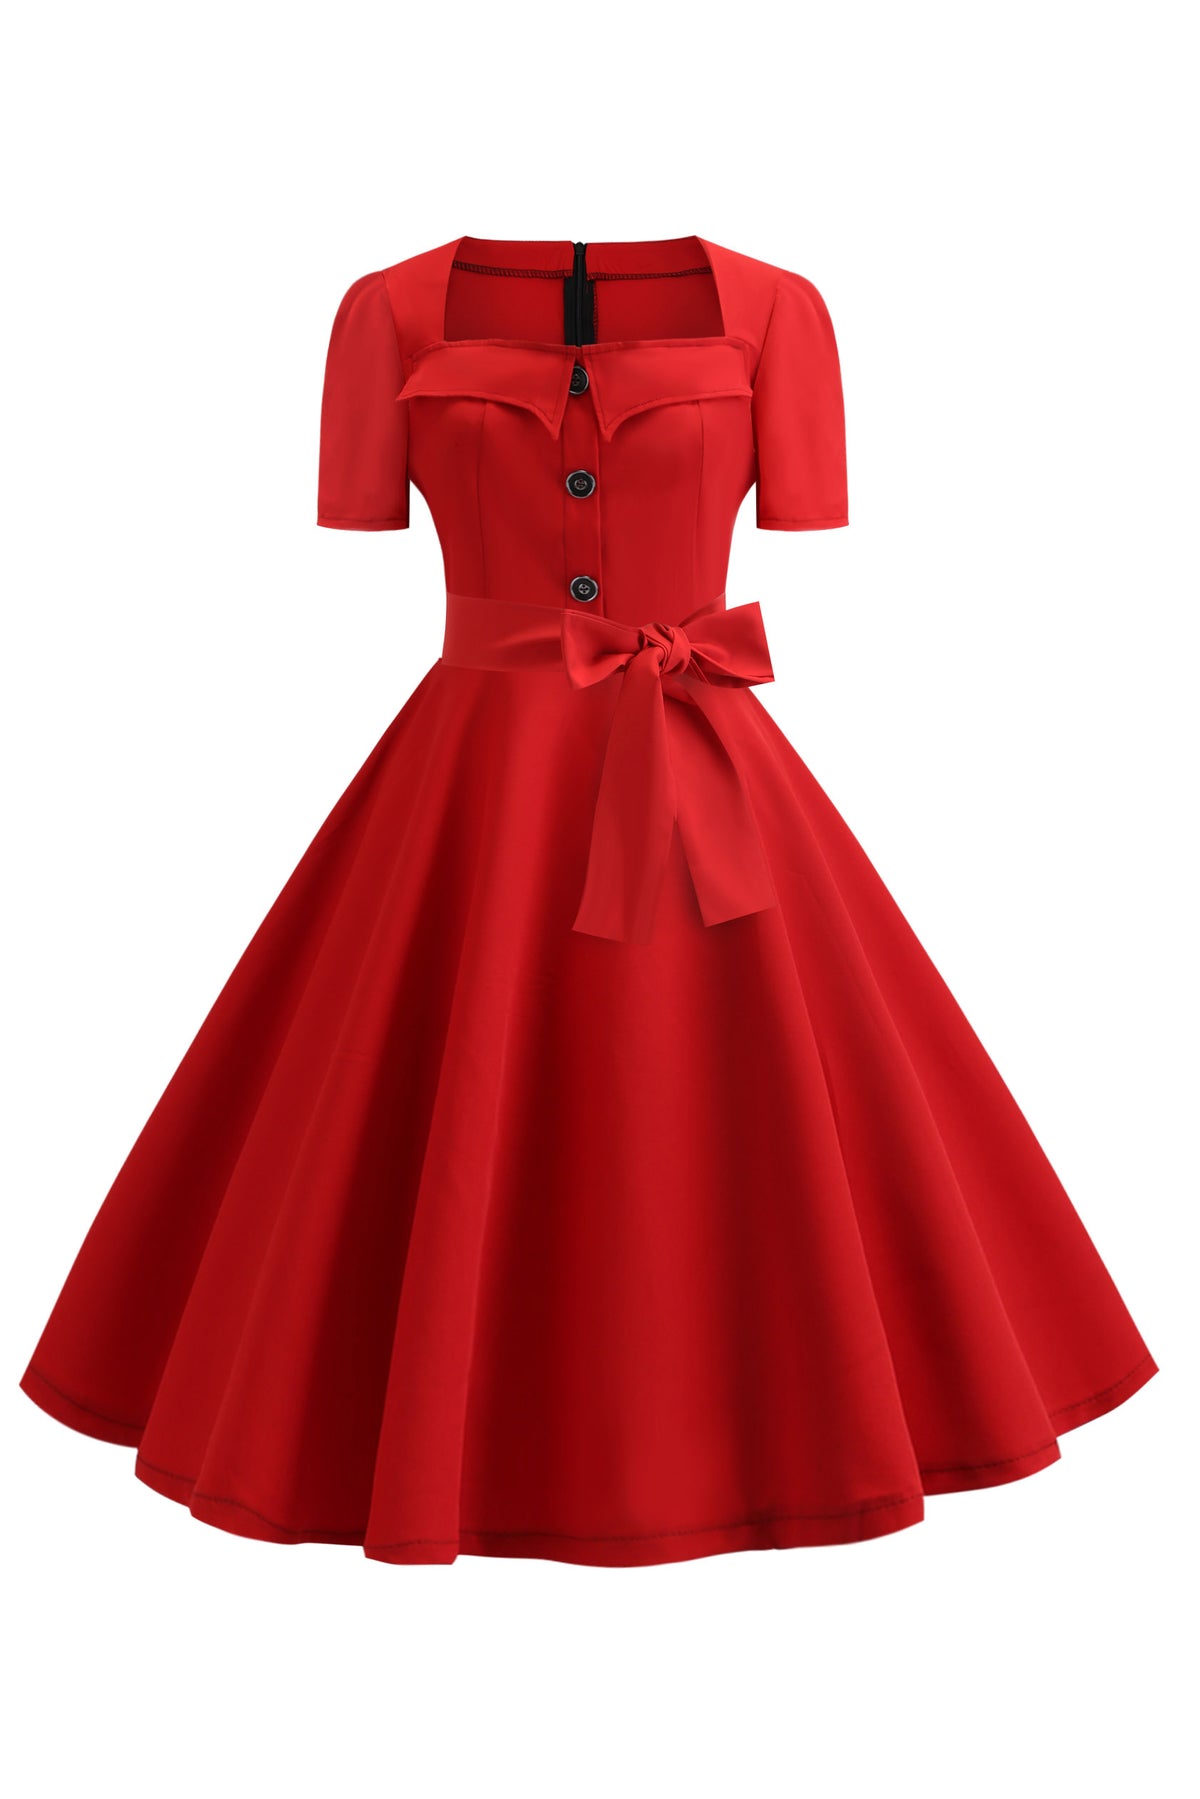 Vintage Square Neck Fit & Flare Red Cocktail Dress